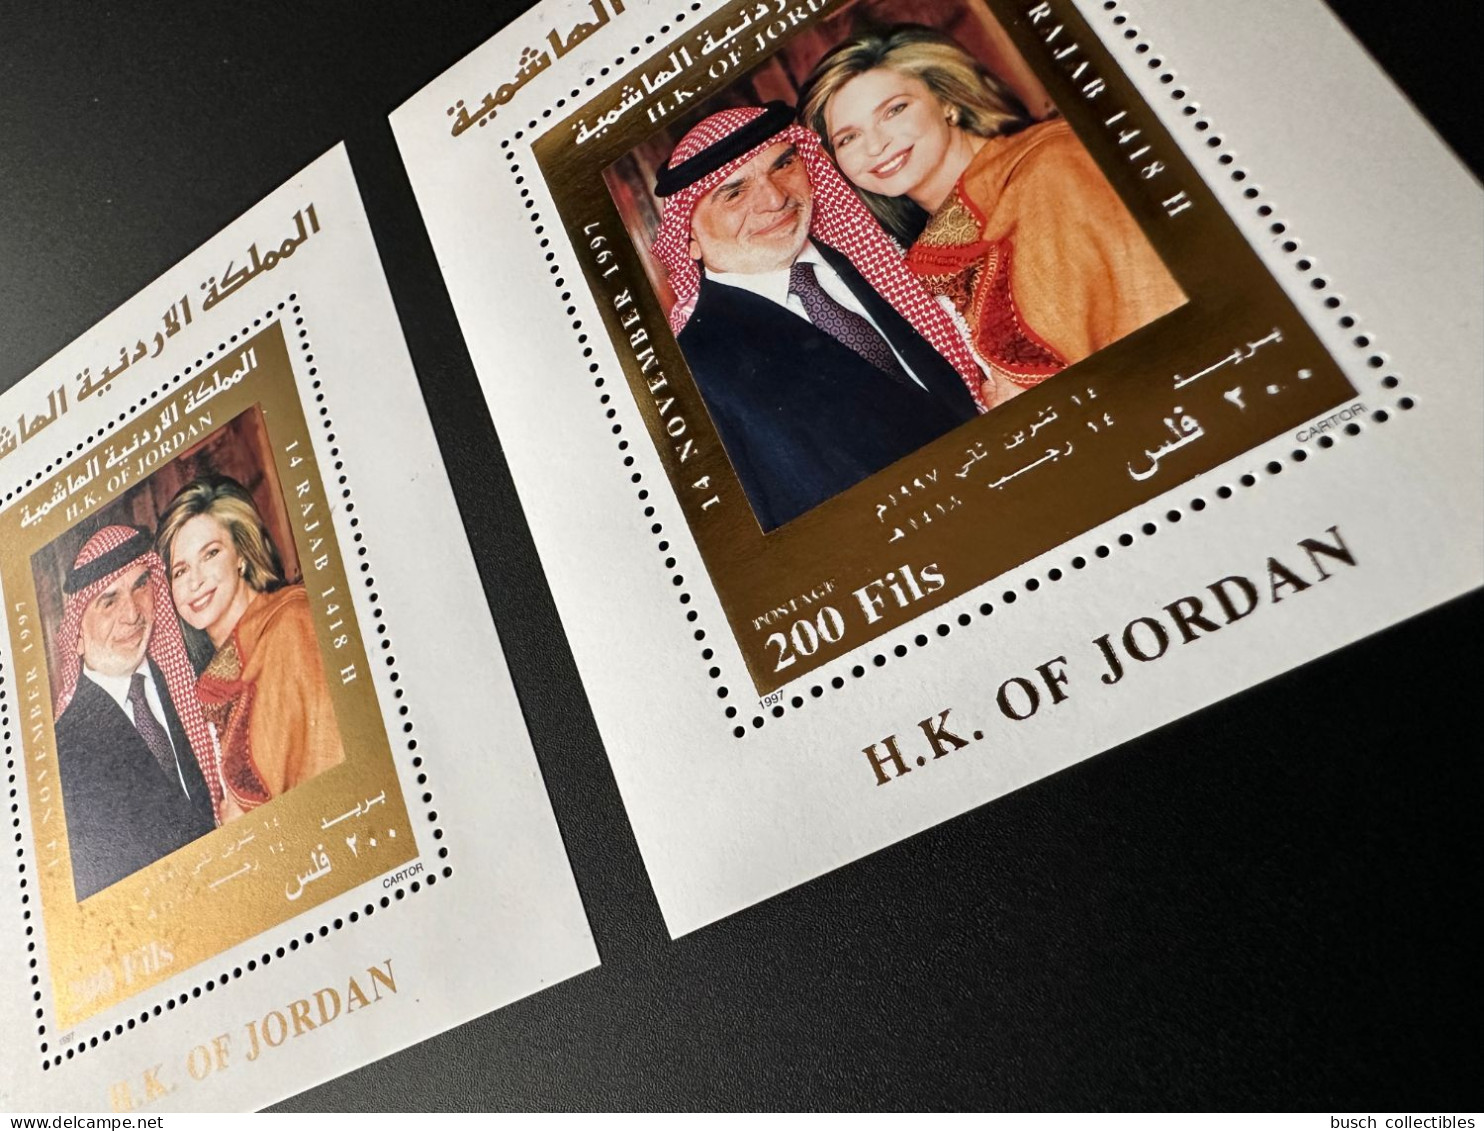 Jordan Jordanie Jordanien 1997 Mi. Bl. 84 RARE GOLD S/S Unknown Not Listed Hussein II Birthday - Giordania